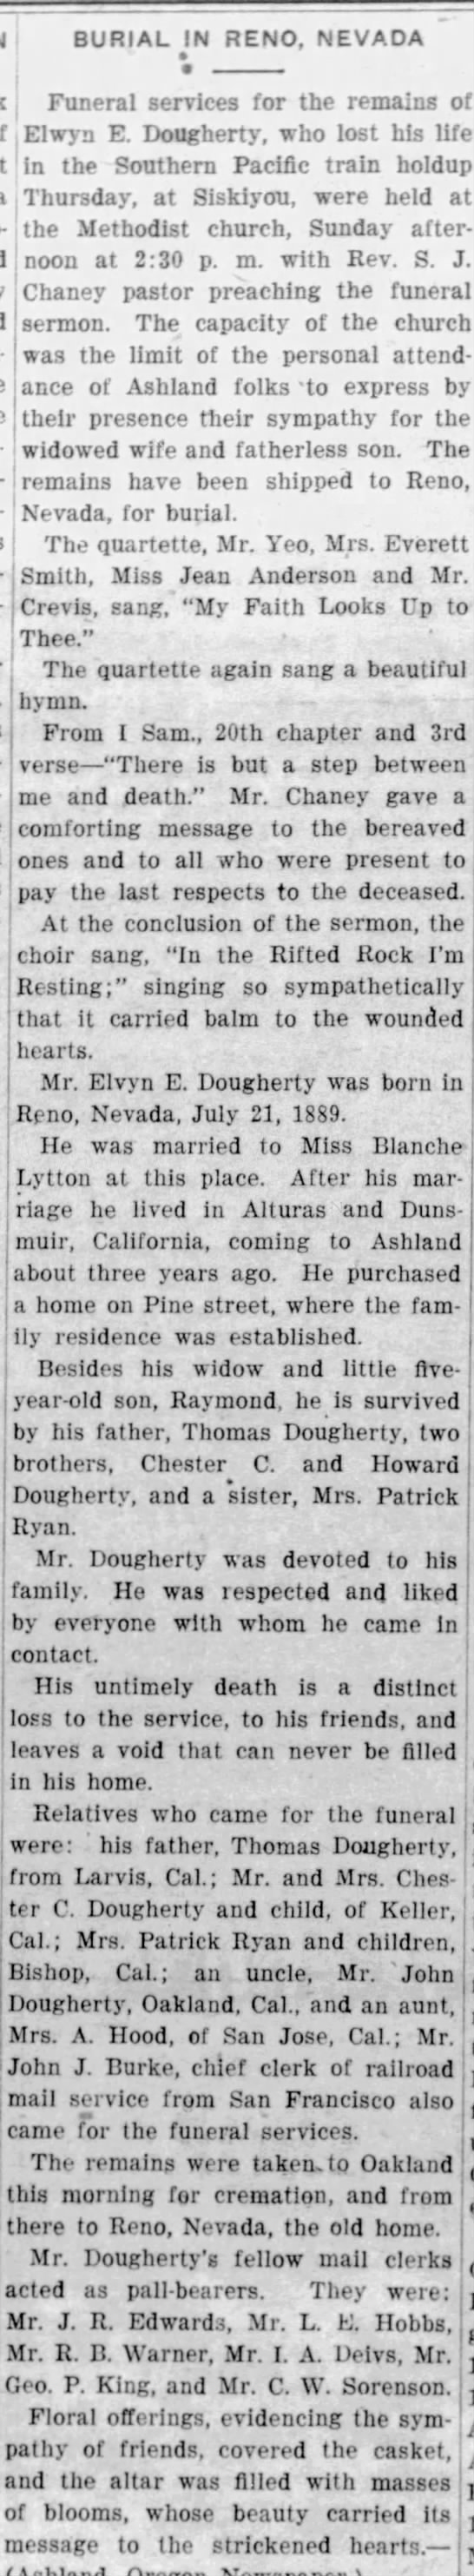 Obituary for Elwyn E. Dougherty - 